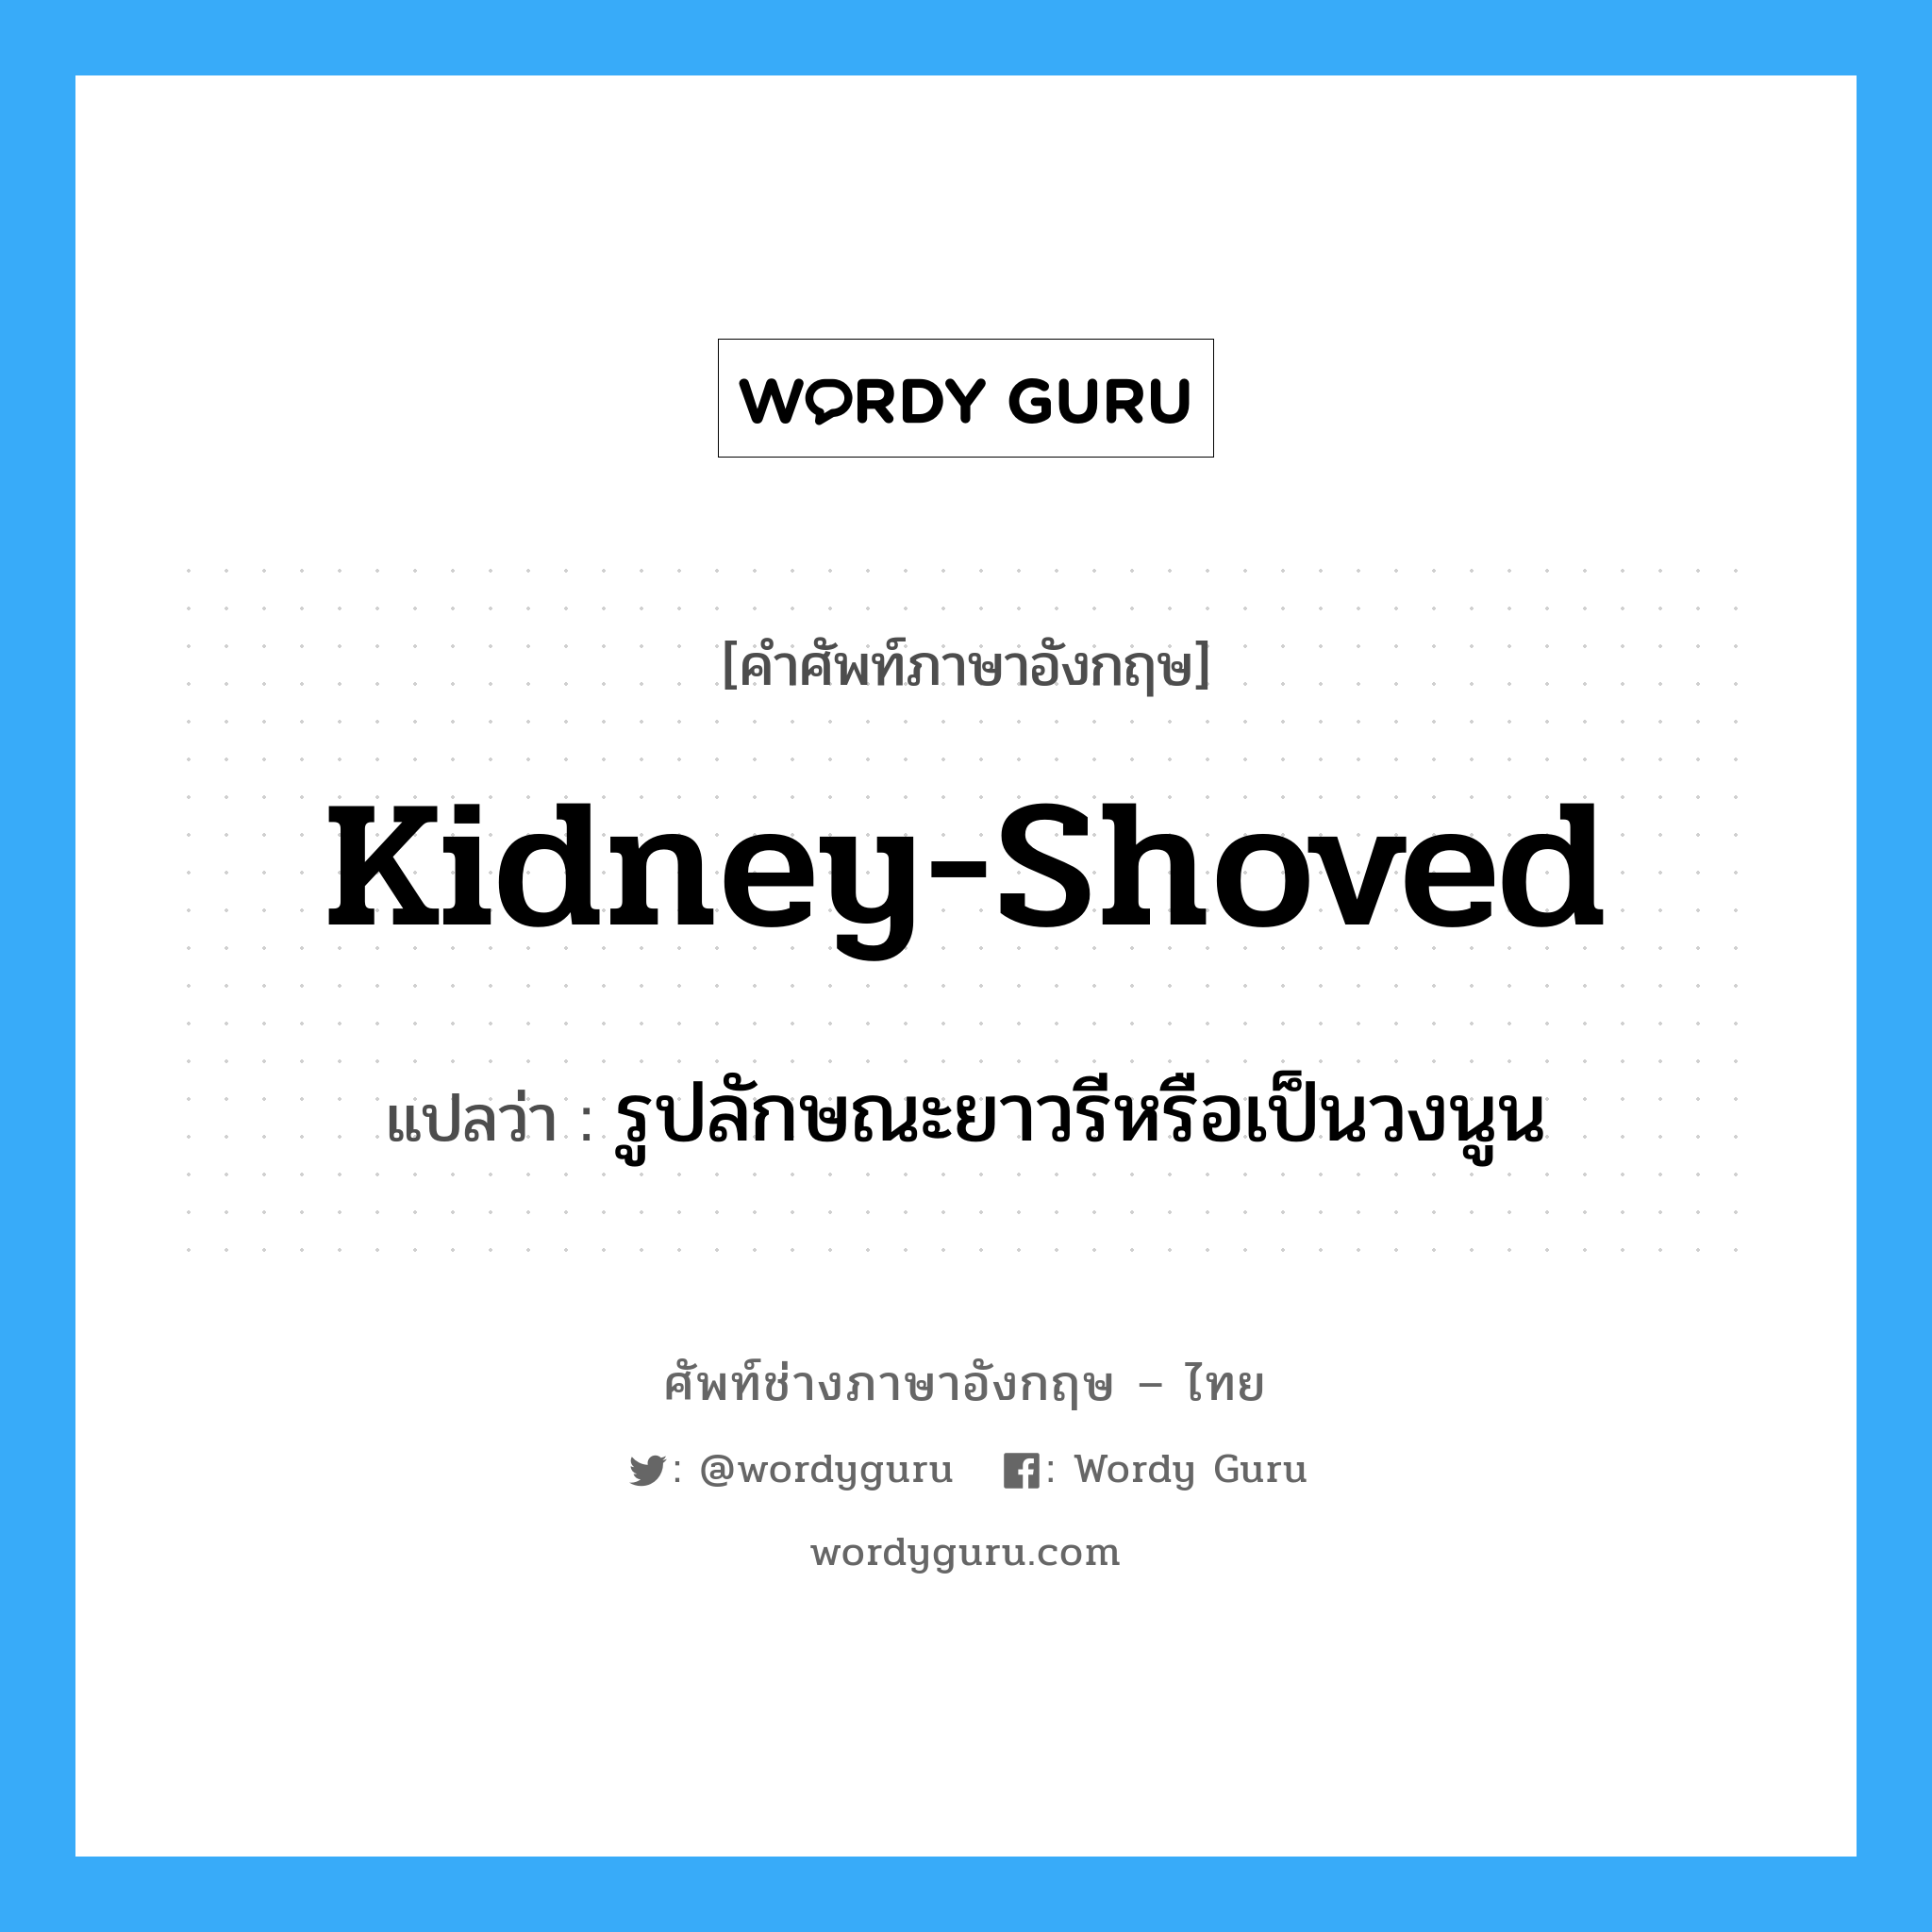 kidney-shoved แปลว่า?, คำศัพท์ช่างภาษาอังกฤษ - ไทย kidney-shoved คำศัพท์ภาษาอังกฤษ kidney-shoved แปลว่า รูปลักษณะยาวรีหรือเป็นวงนูน